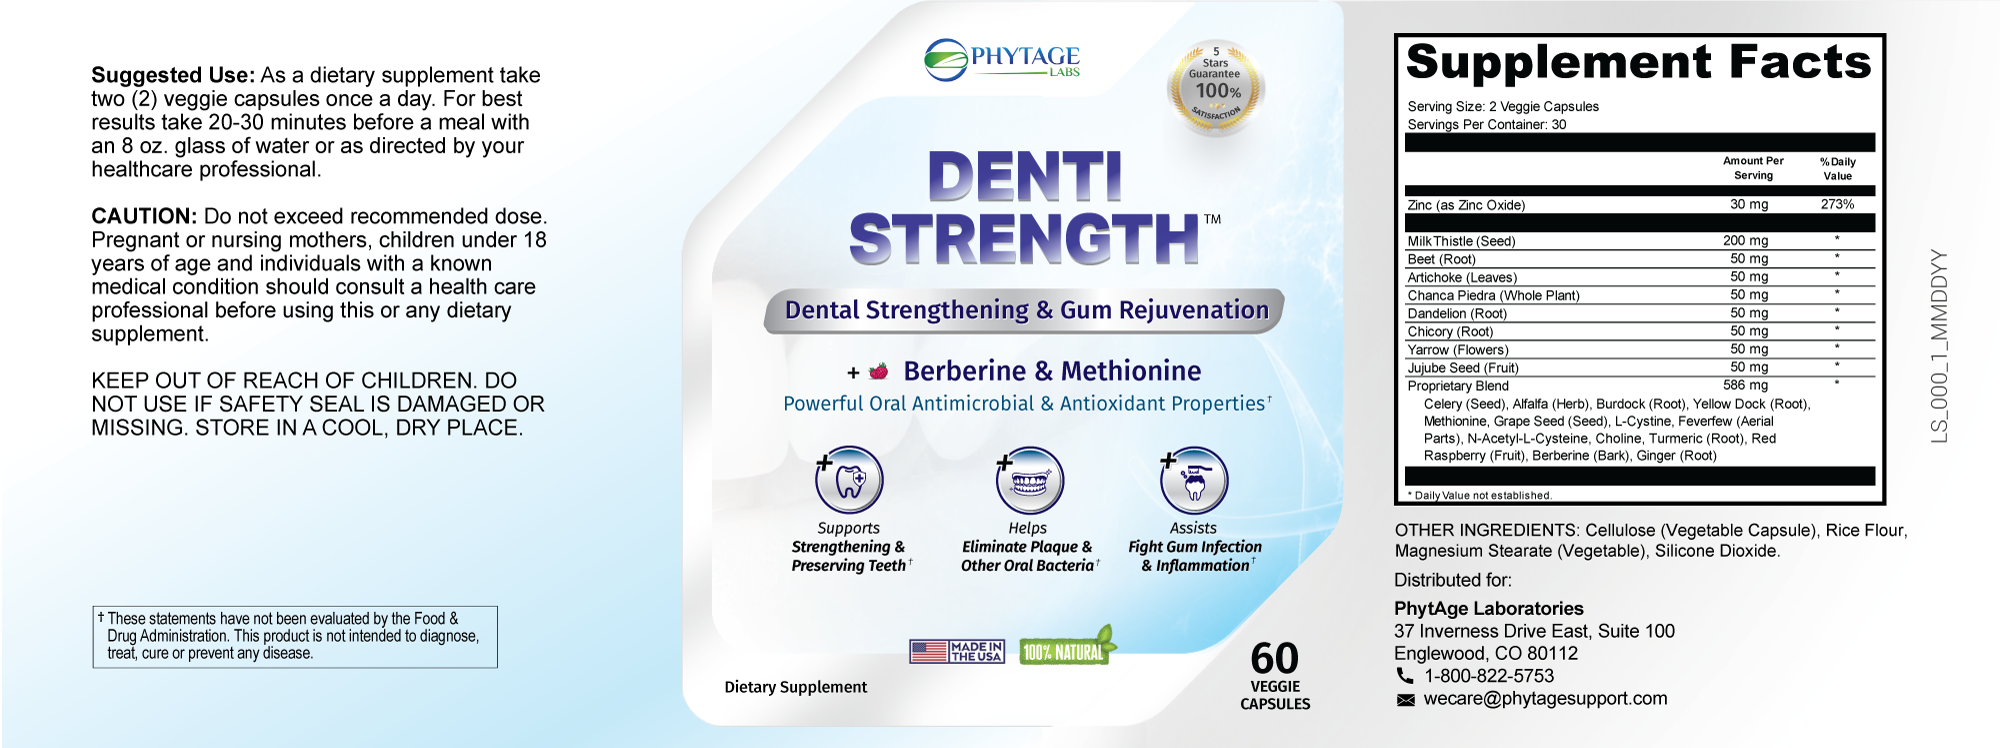 Denti Strength Ingredients Label